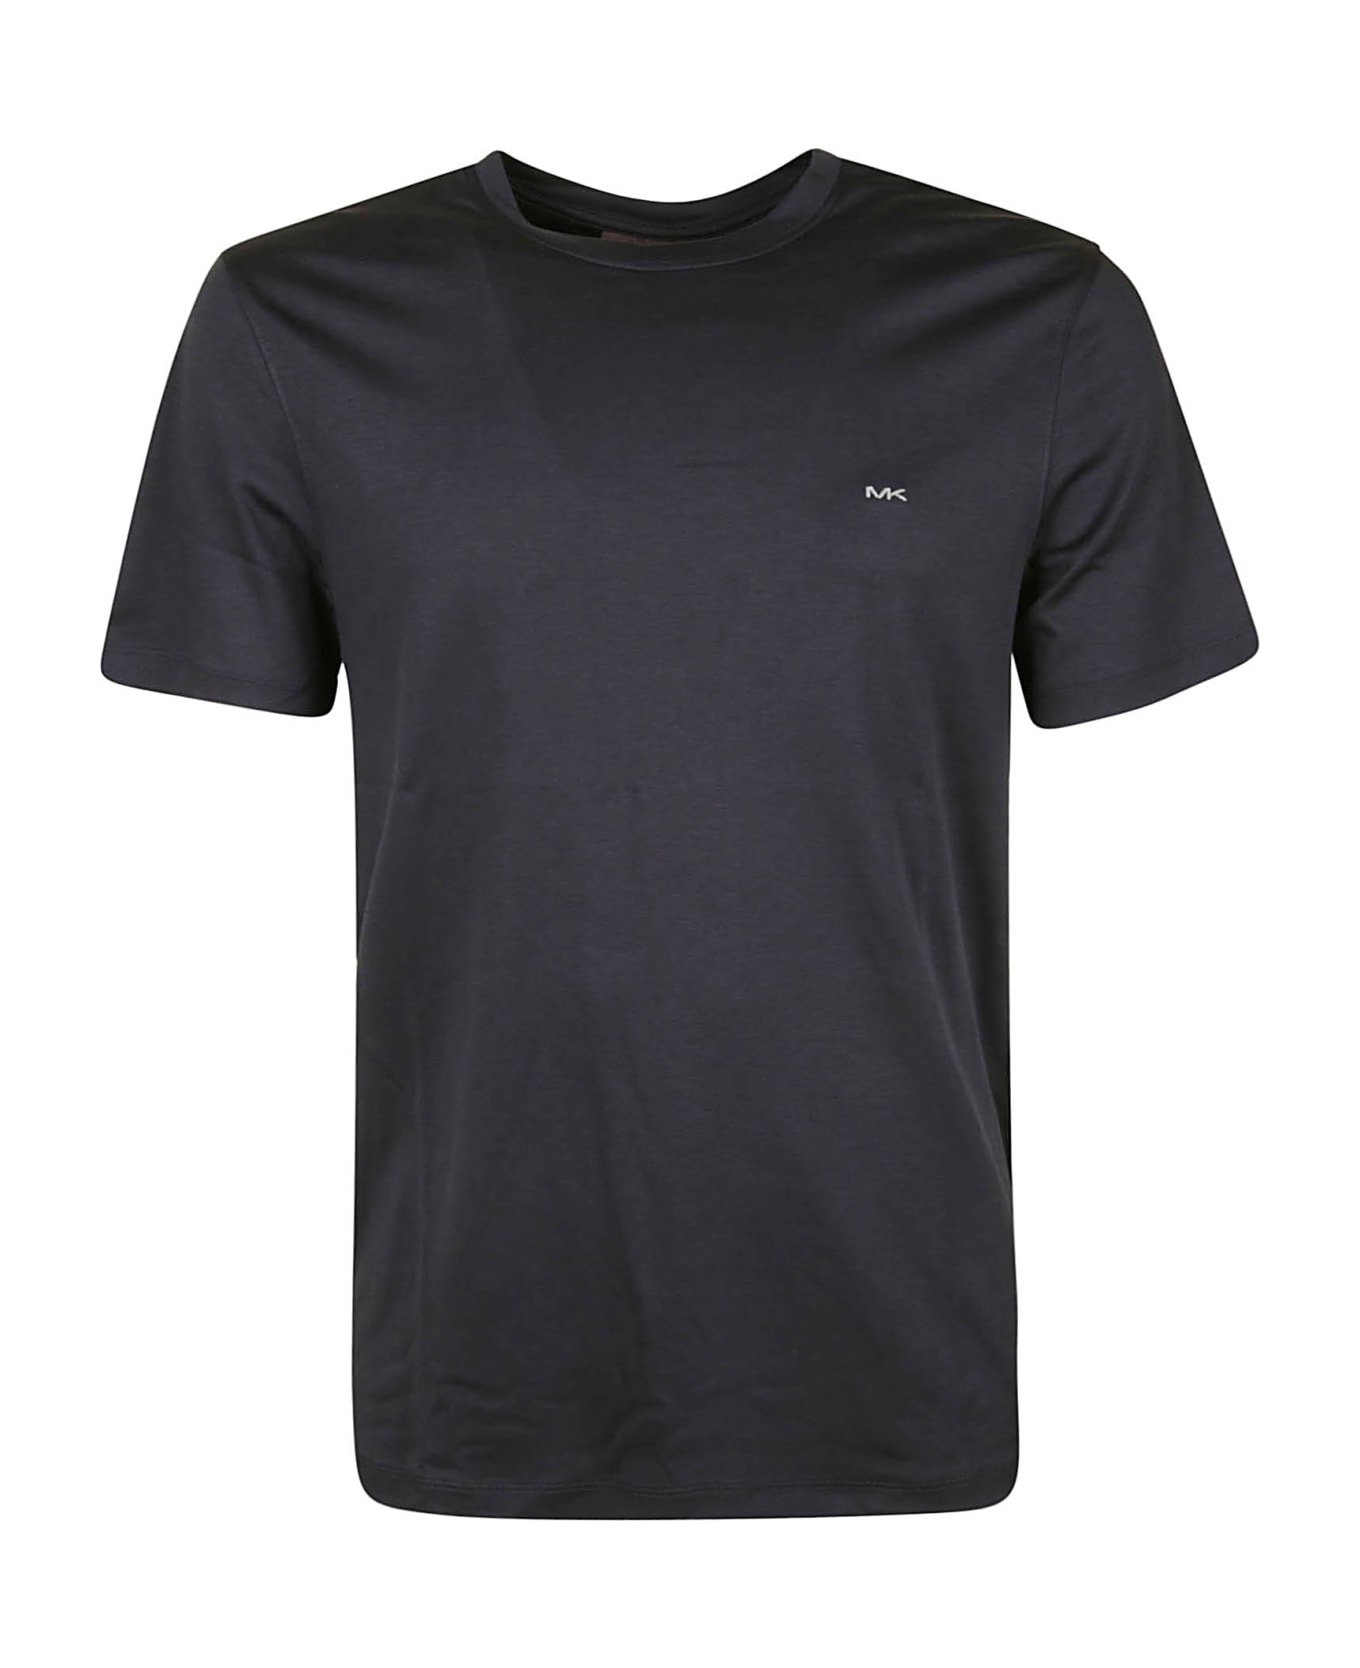 Michael Kors Spring 22 T-shirt - Black